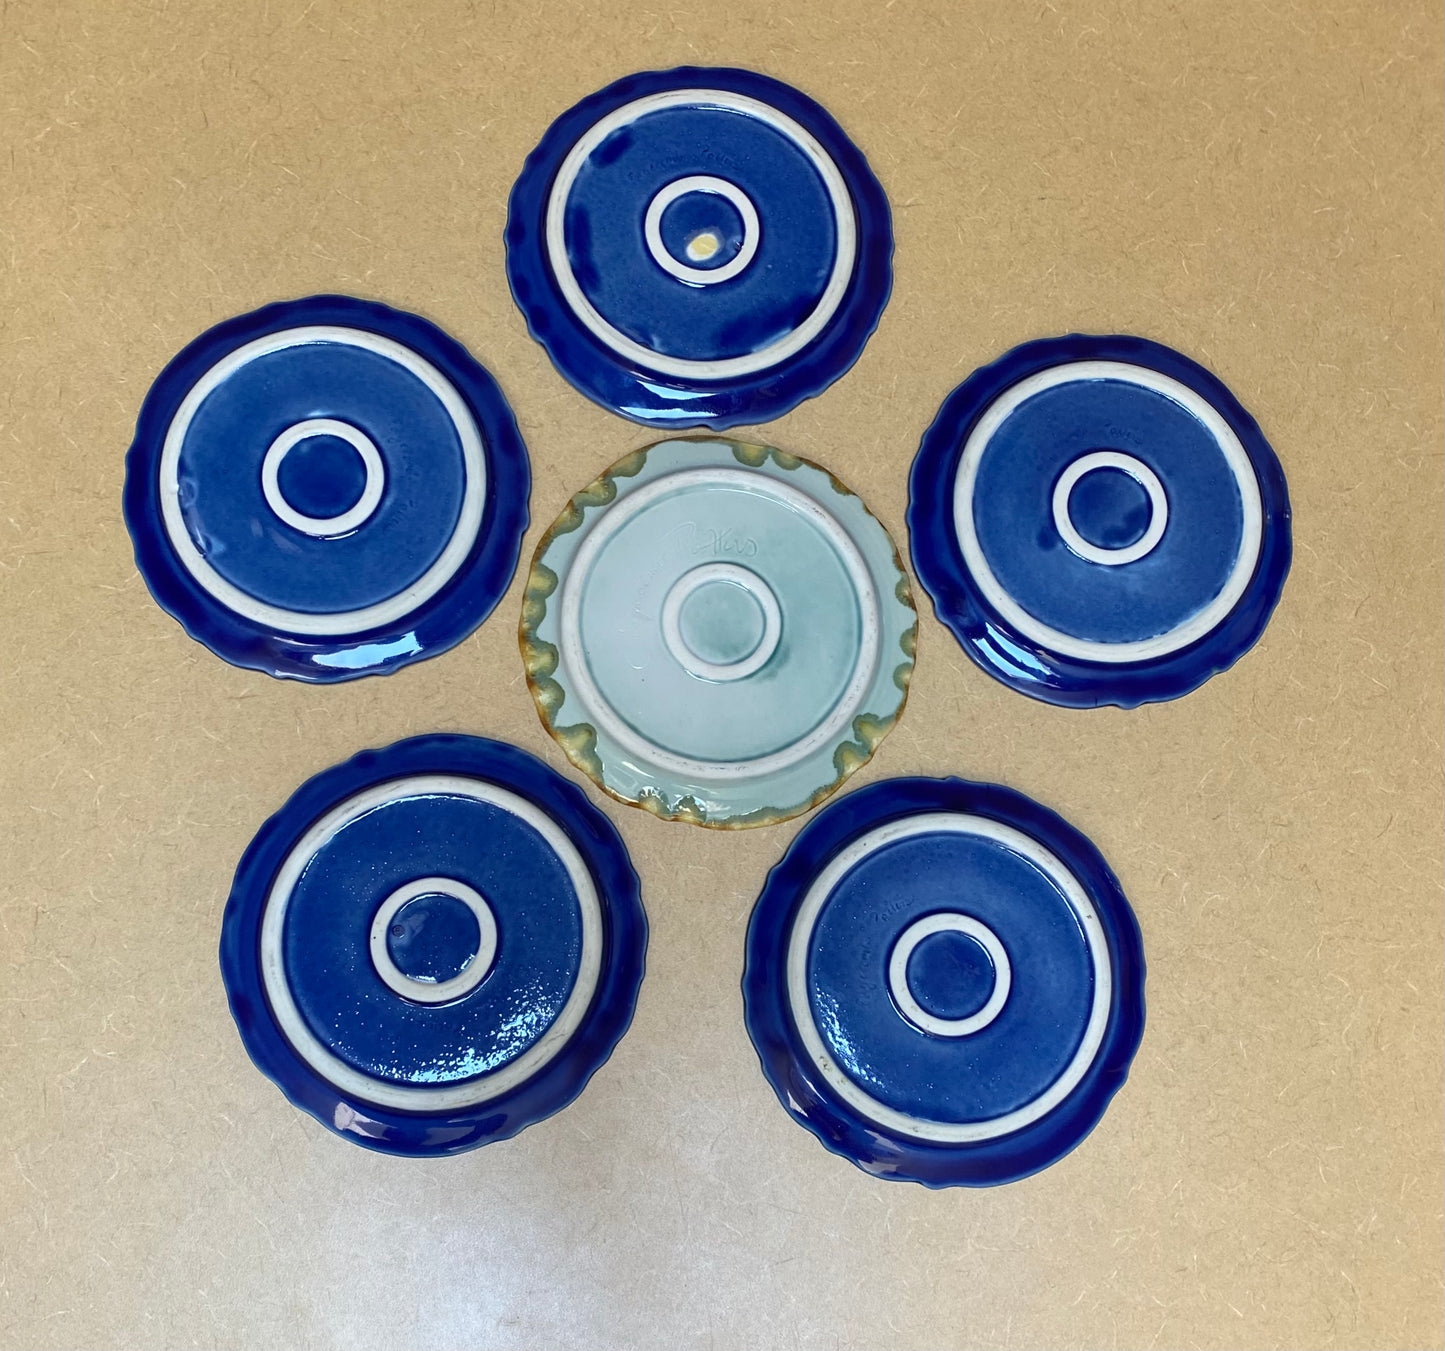 Six 8-inch Edgecomb pattern salt glaze plates